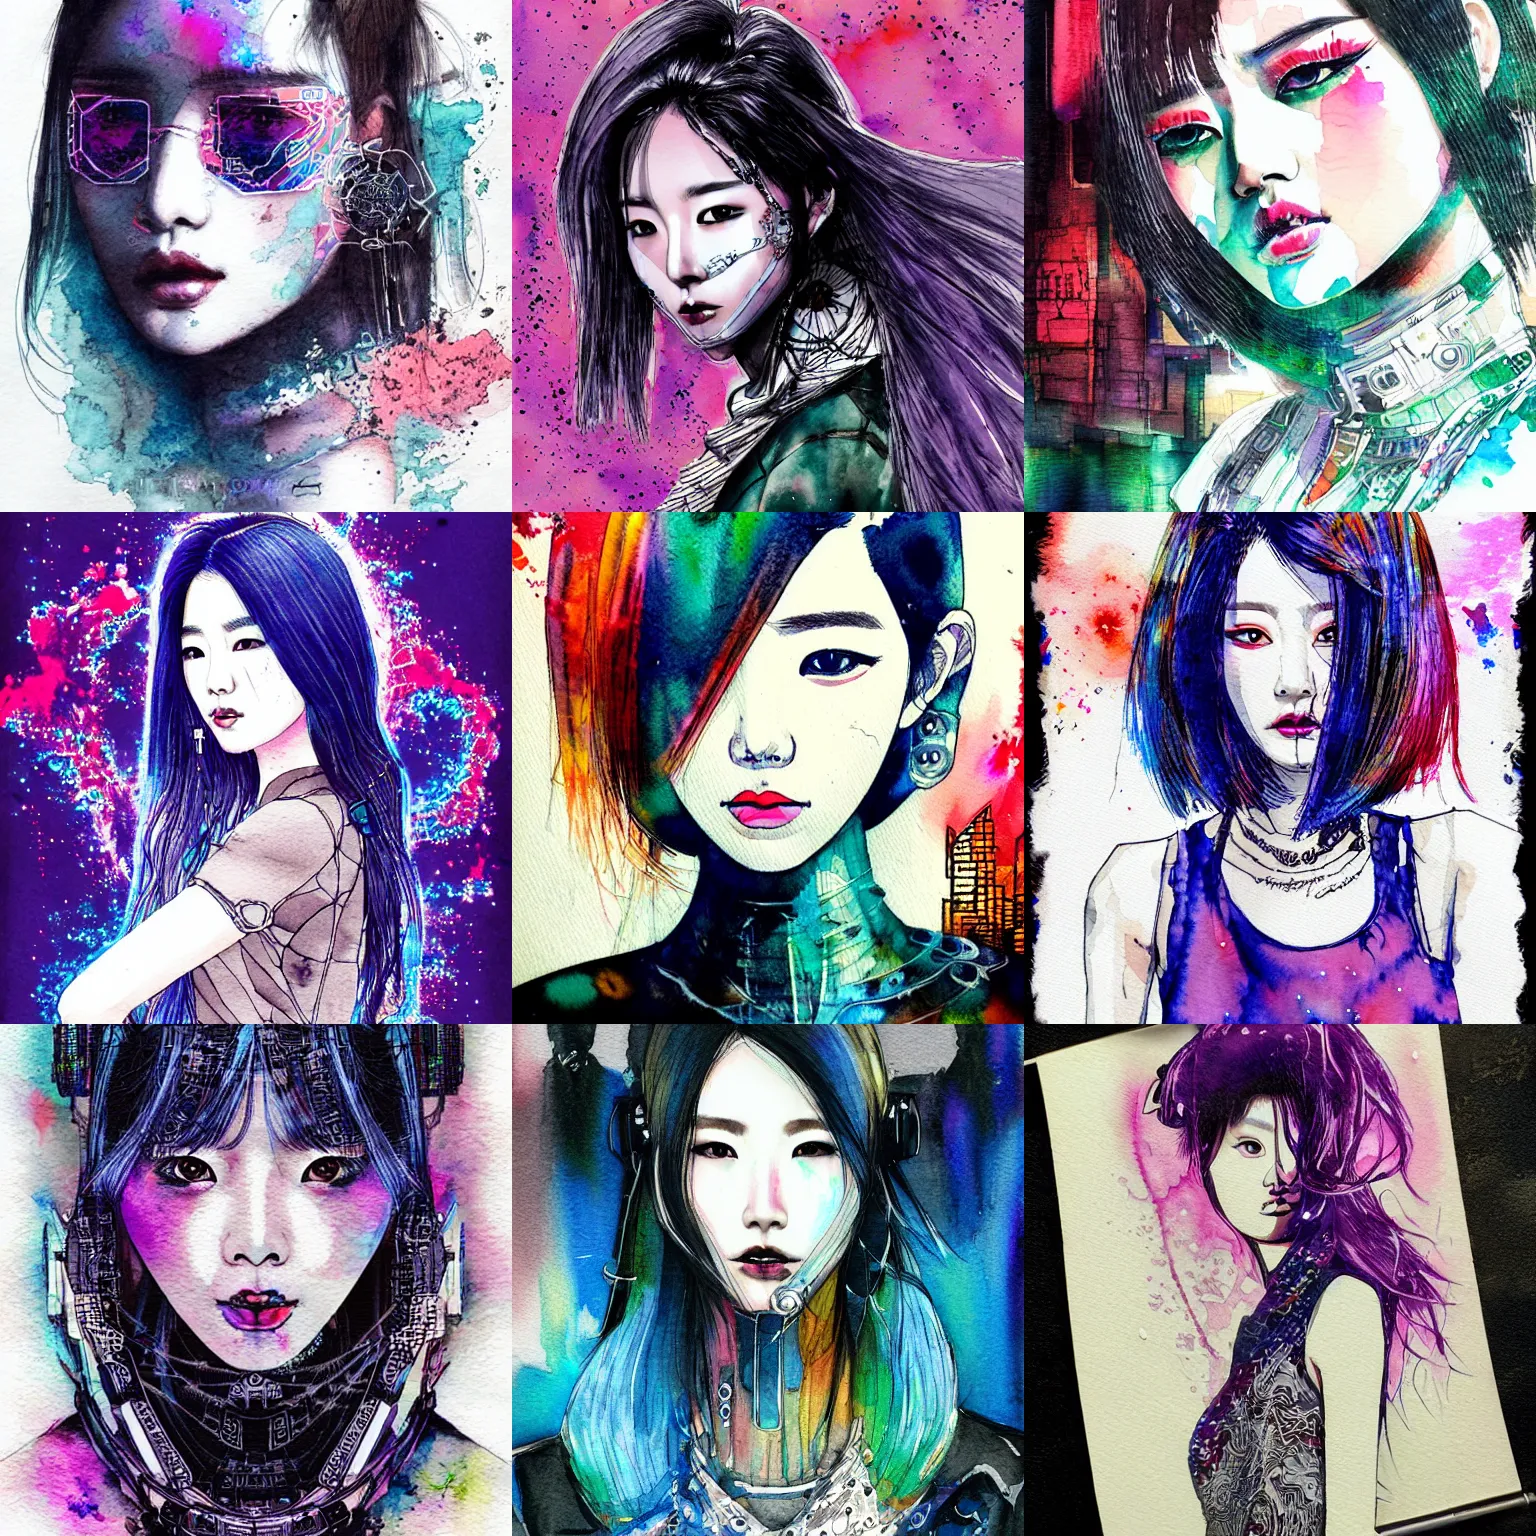 Prompt: korean women's fashion model, intricate watercolor cyberpunk gaia portrait by tim doyle